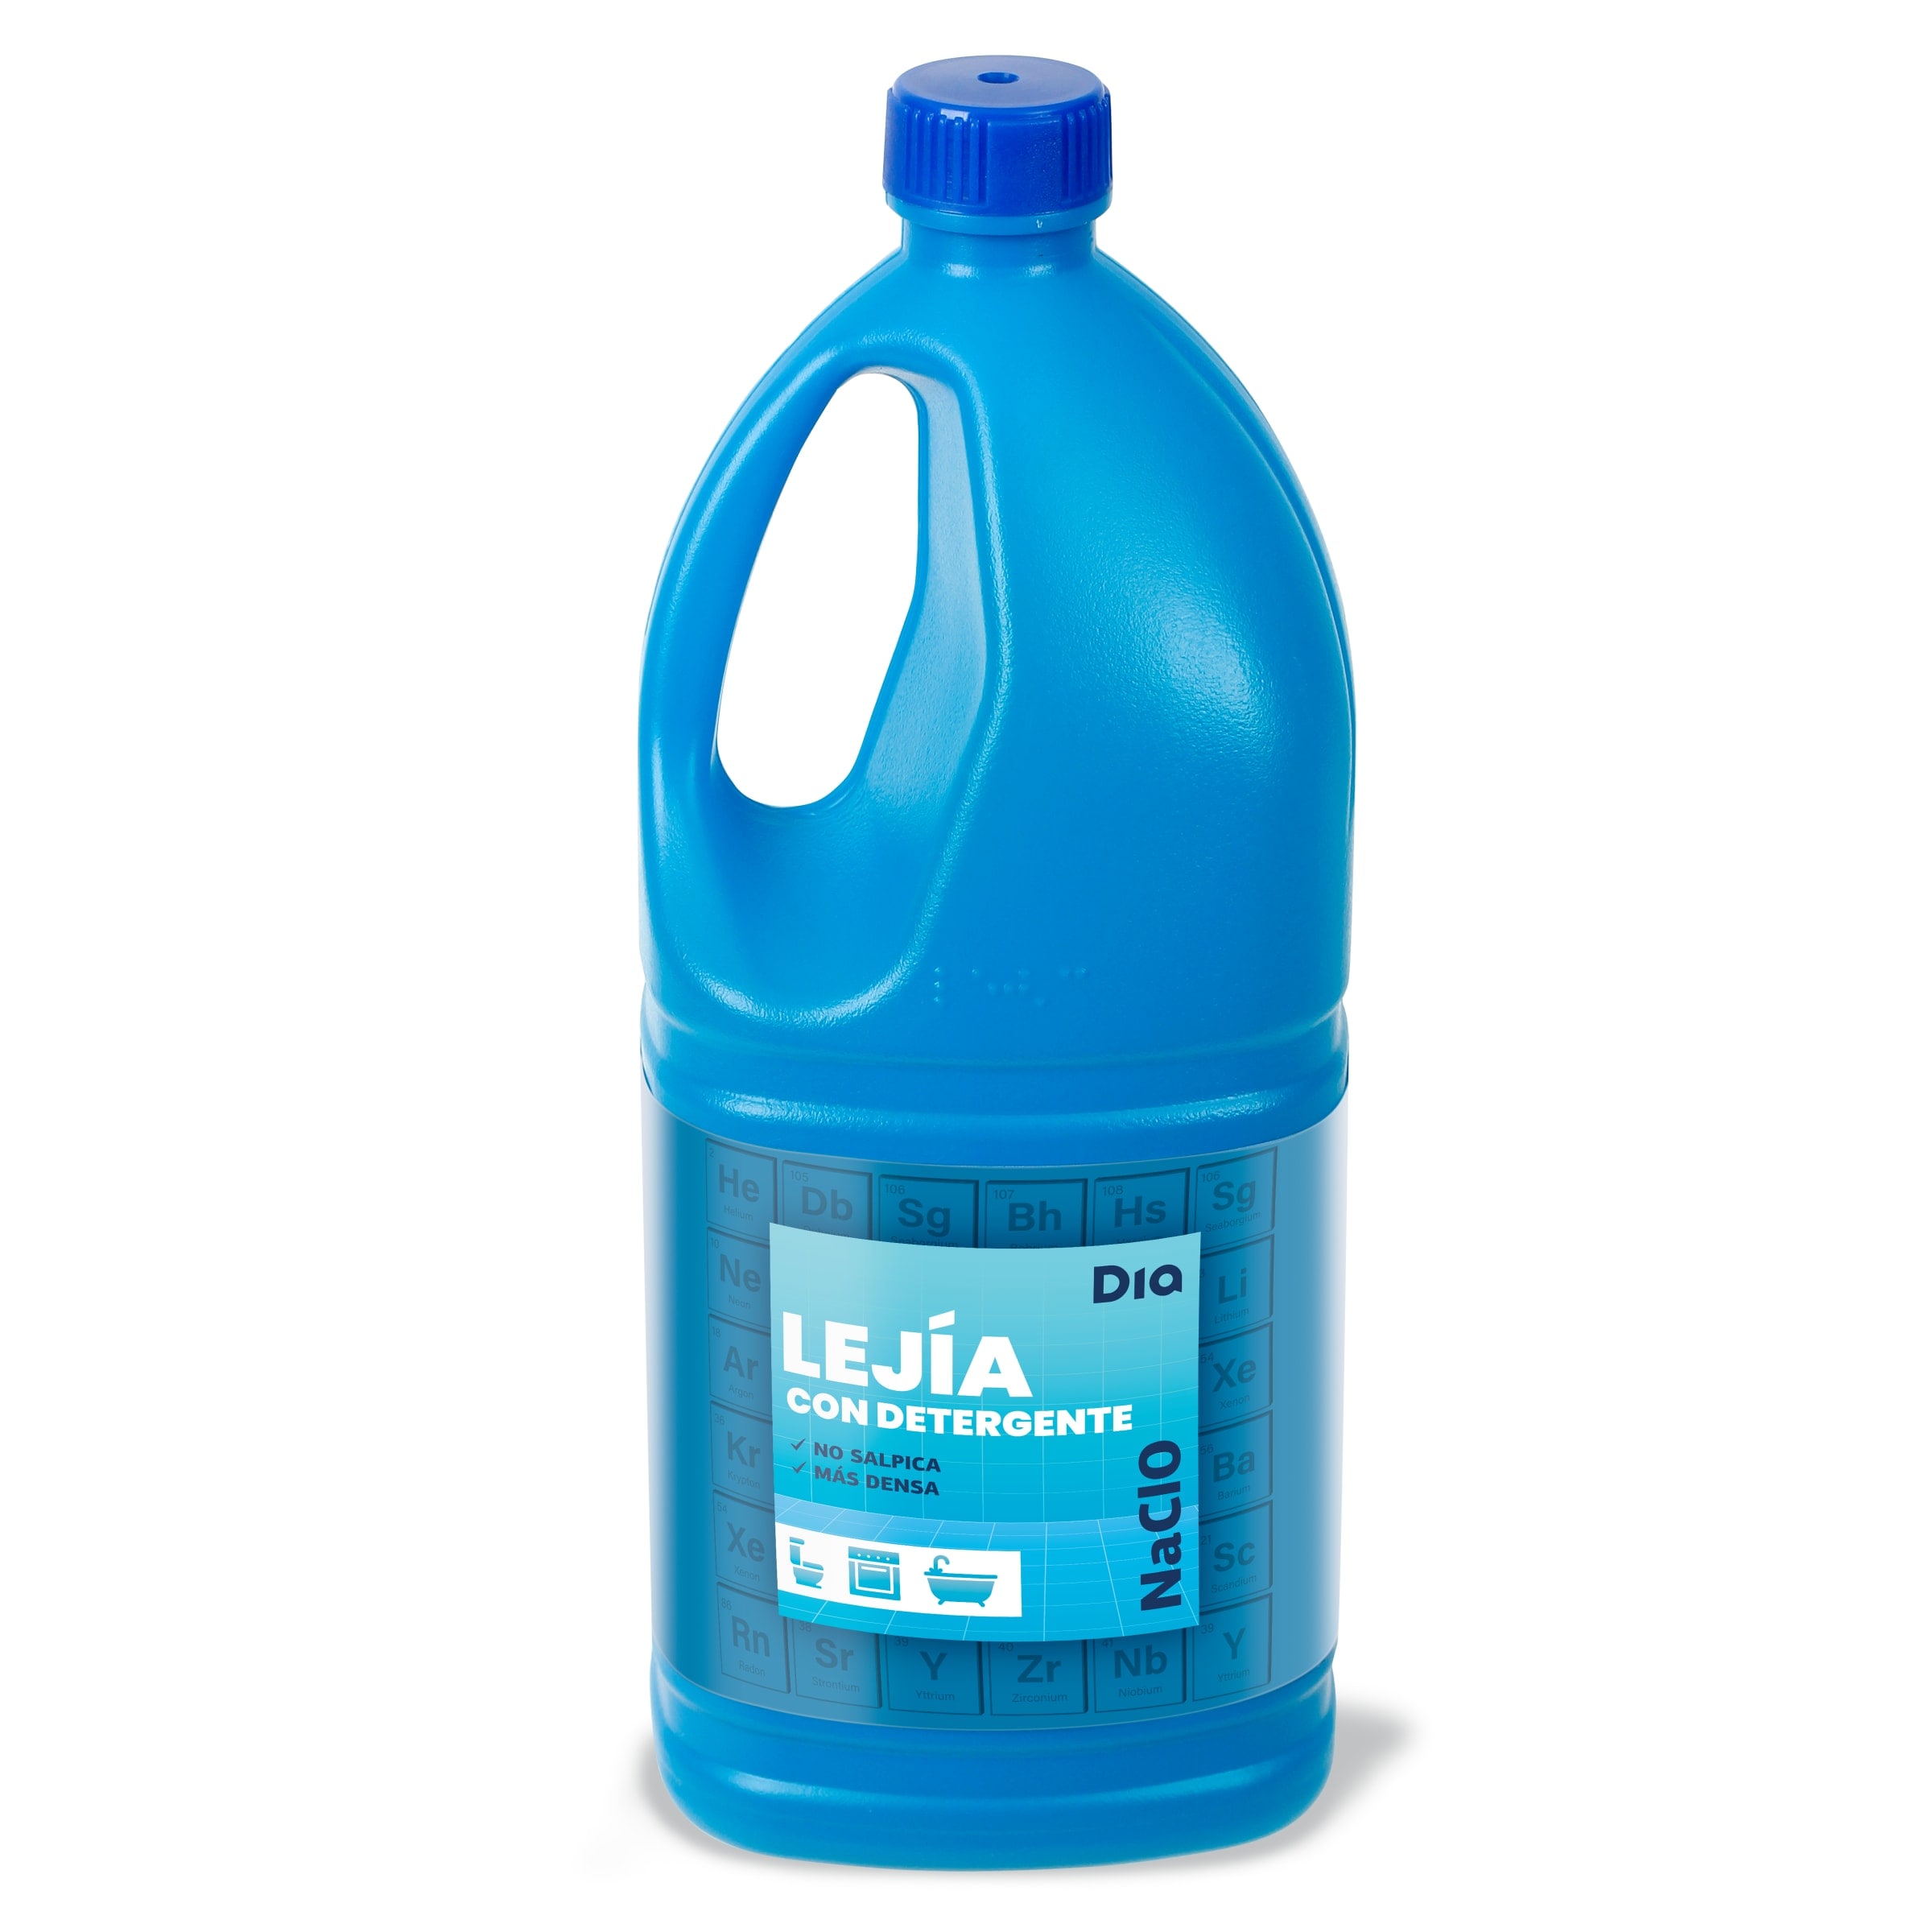 Lejía con detergente Dia garrafa 2 l - Supermercados DIA